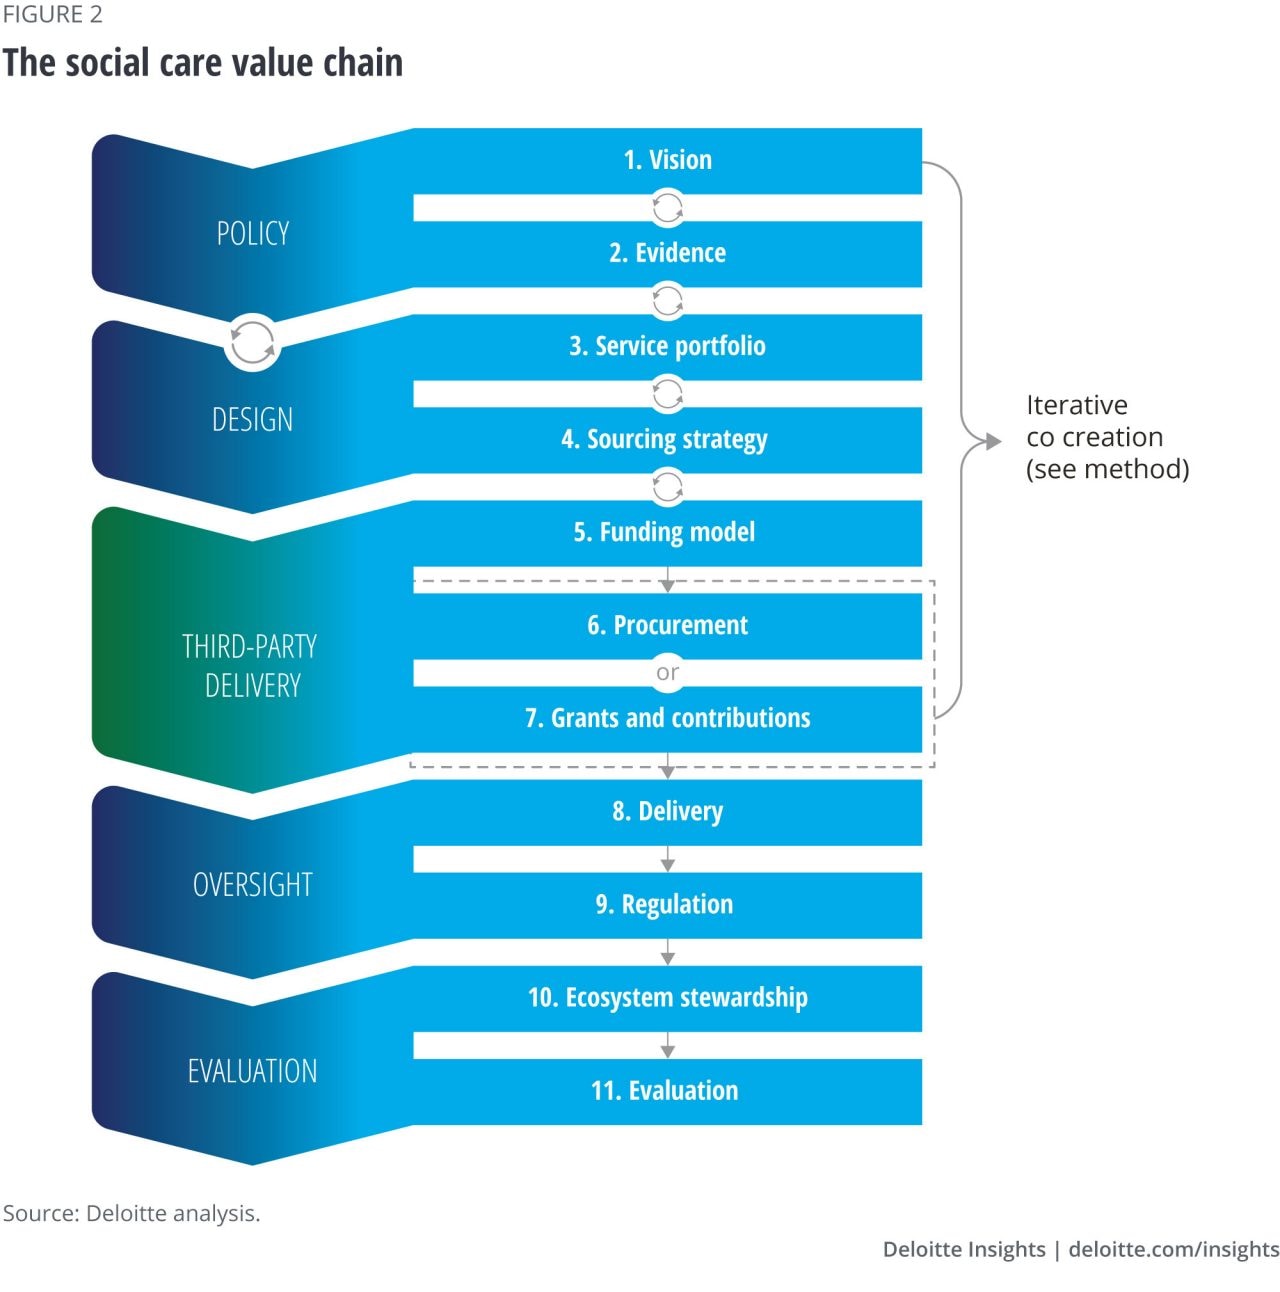 Figure 2. Social care value chain